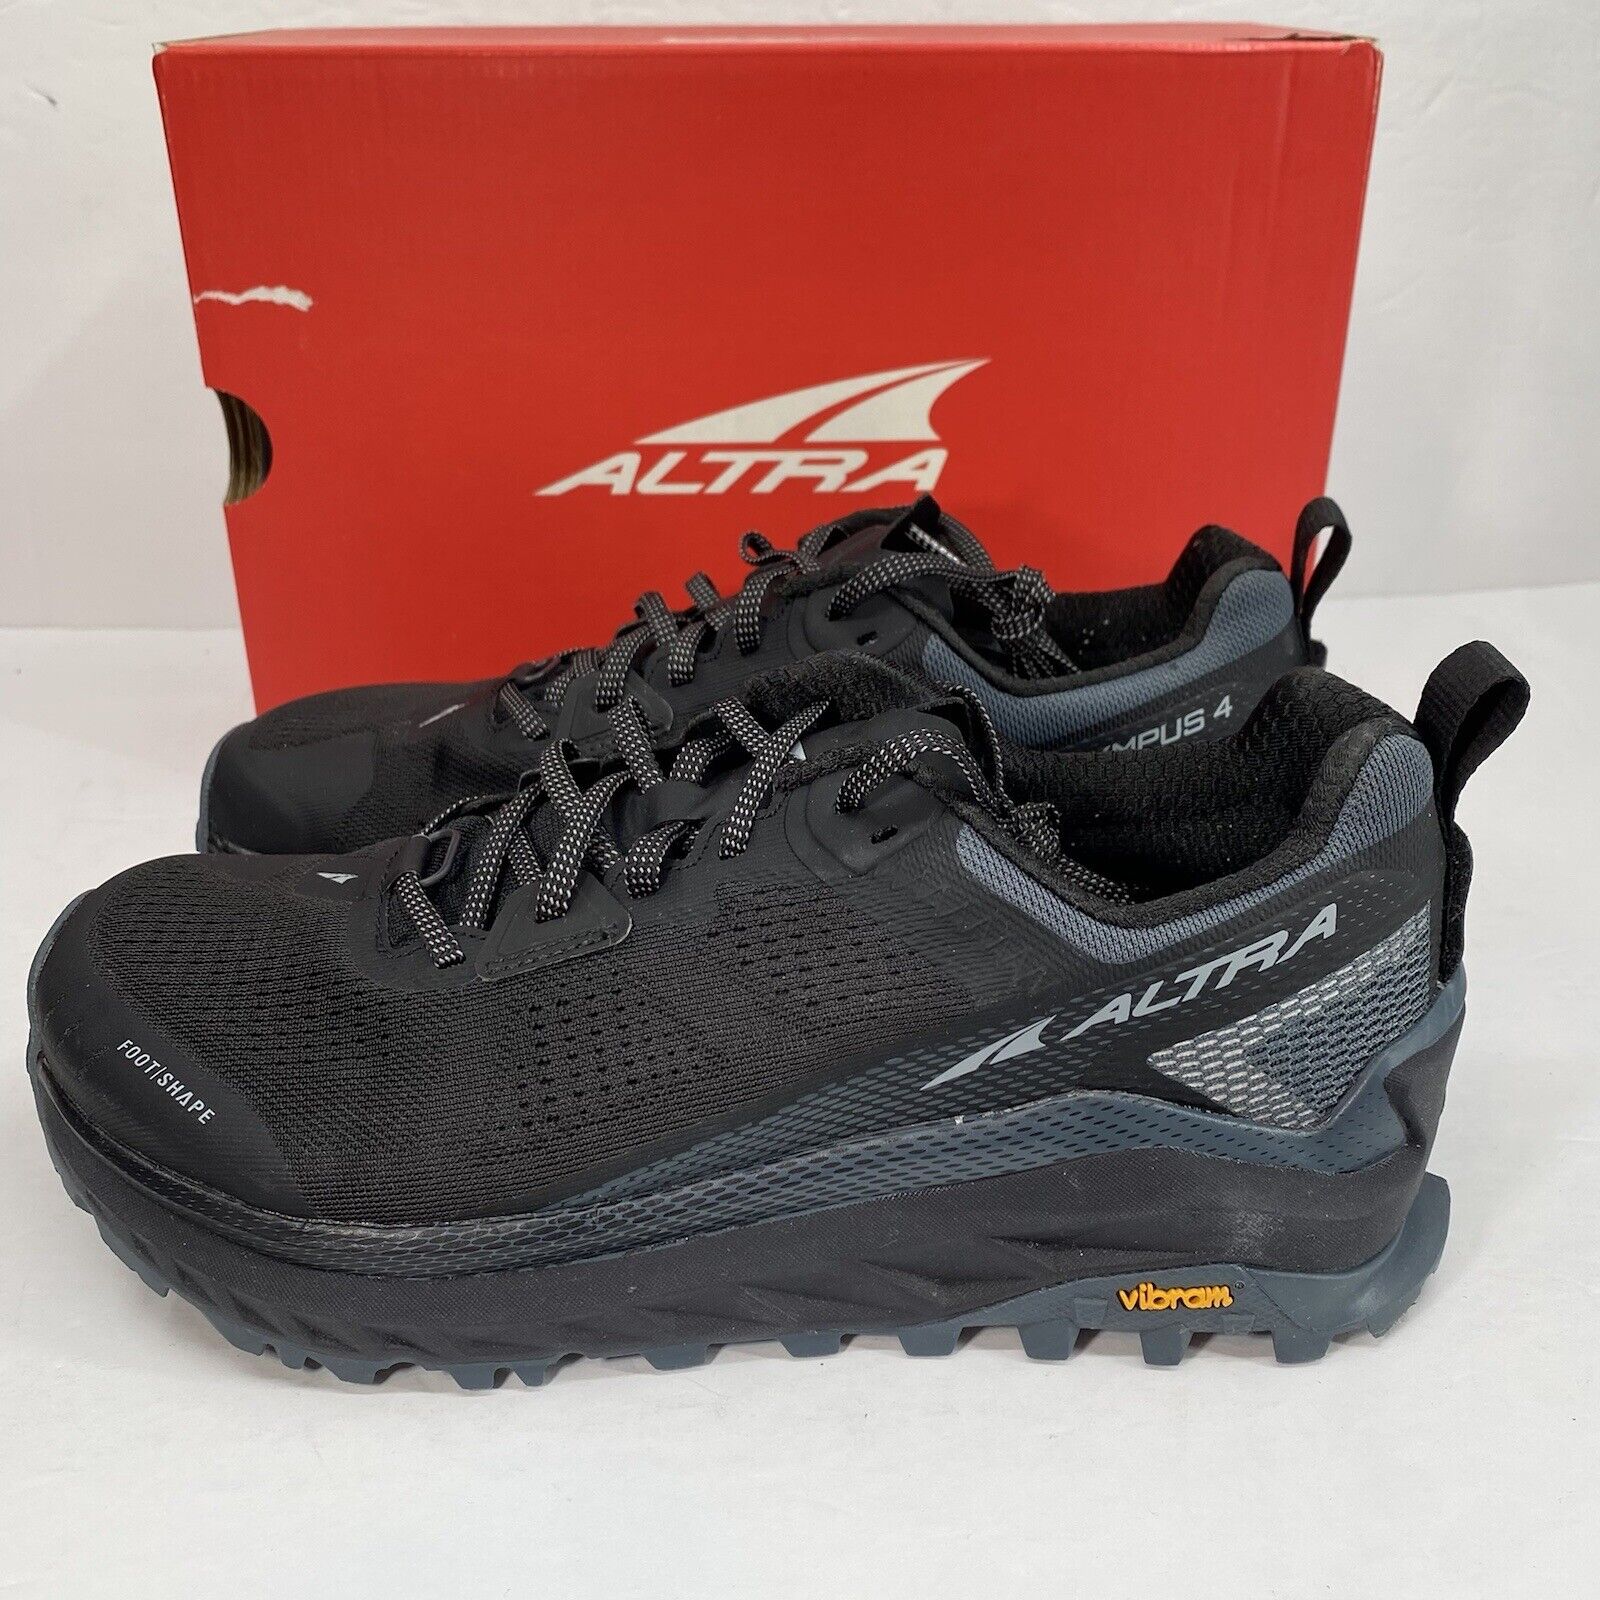 Altra Shoes Olympus 4 Men Size 9 Black Gray Running Sneaker Black Trail Hiking